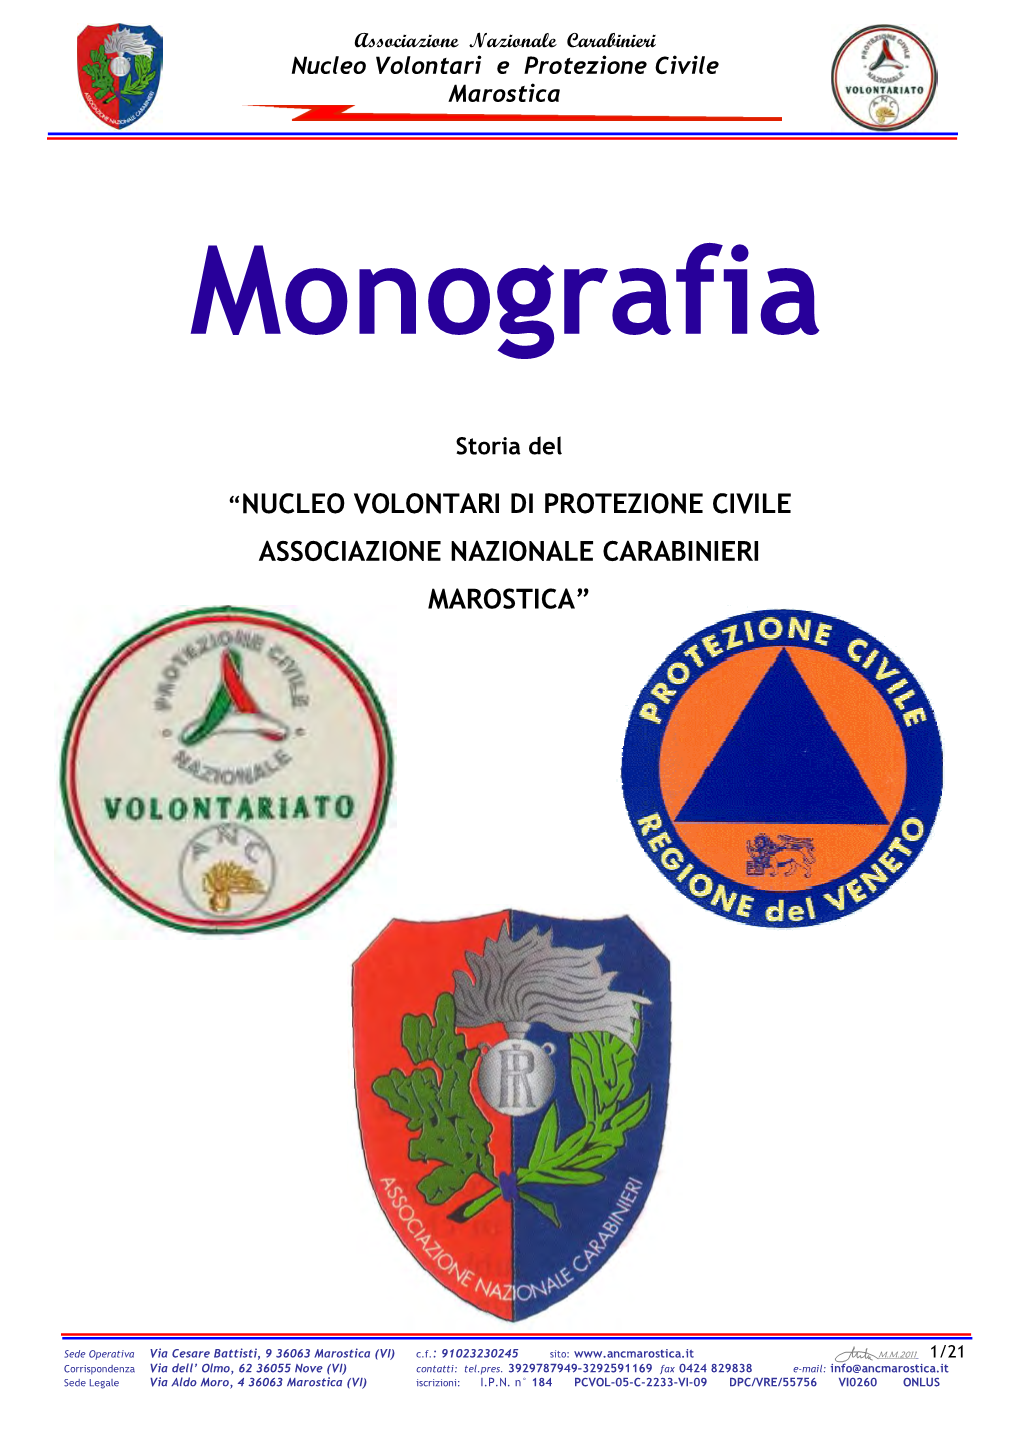 Nucleo Volontari Di Protezione Civile Associazione Nazionale Carabinieri Marostica”